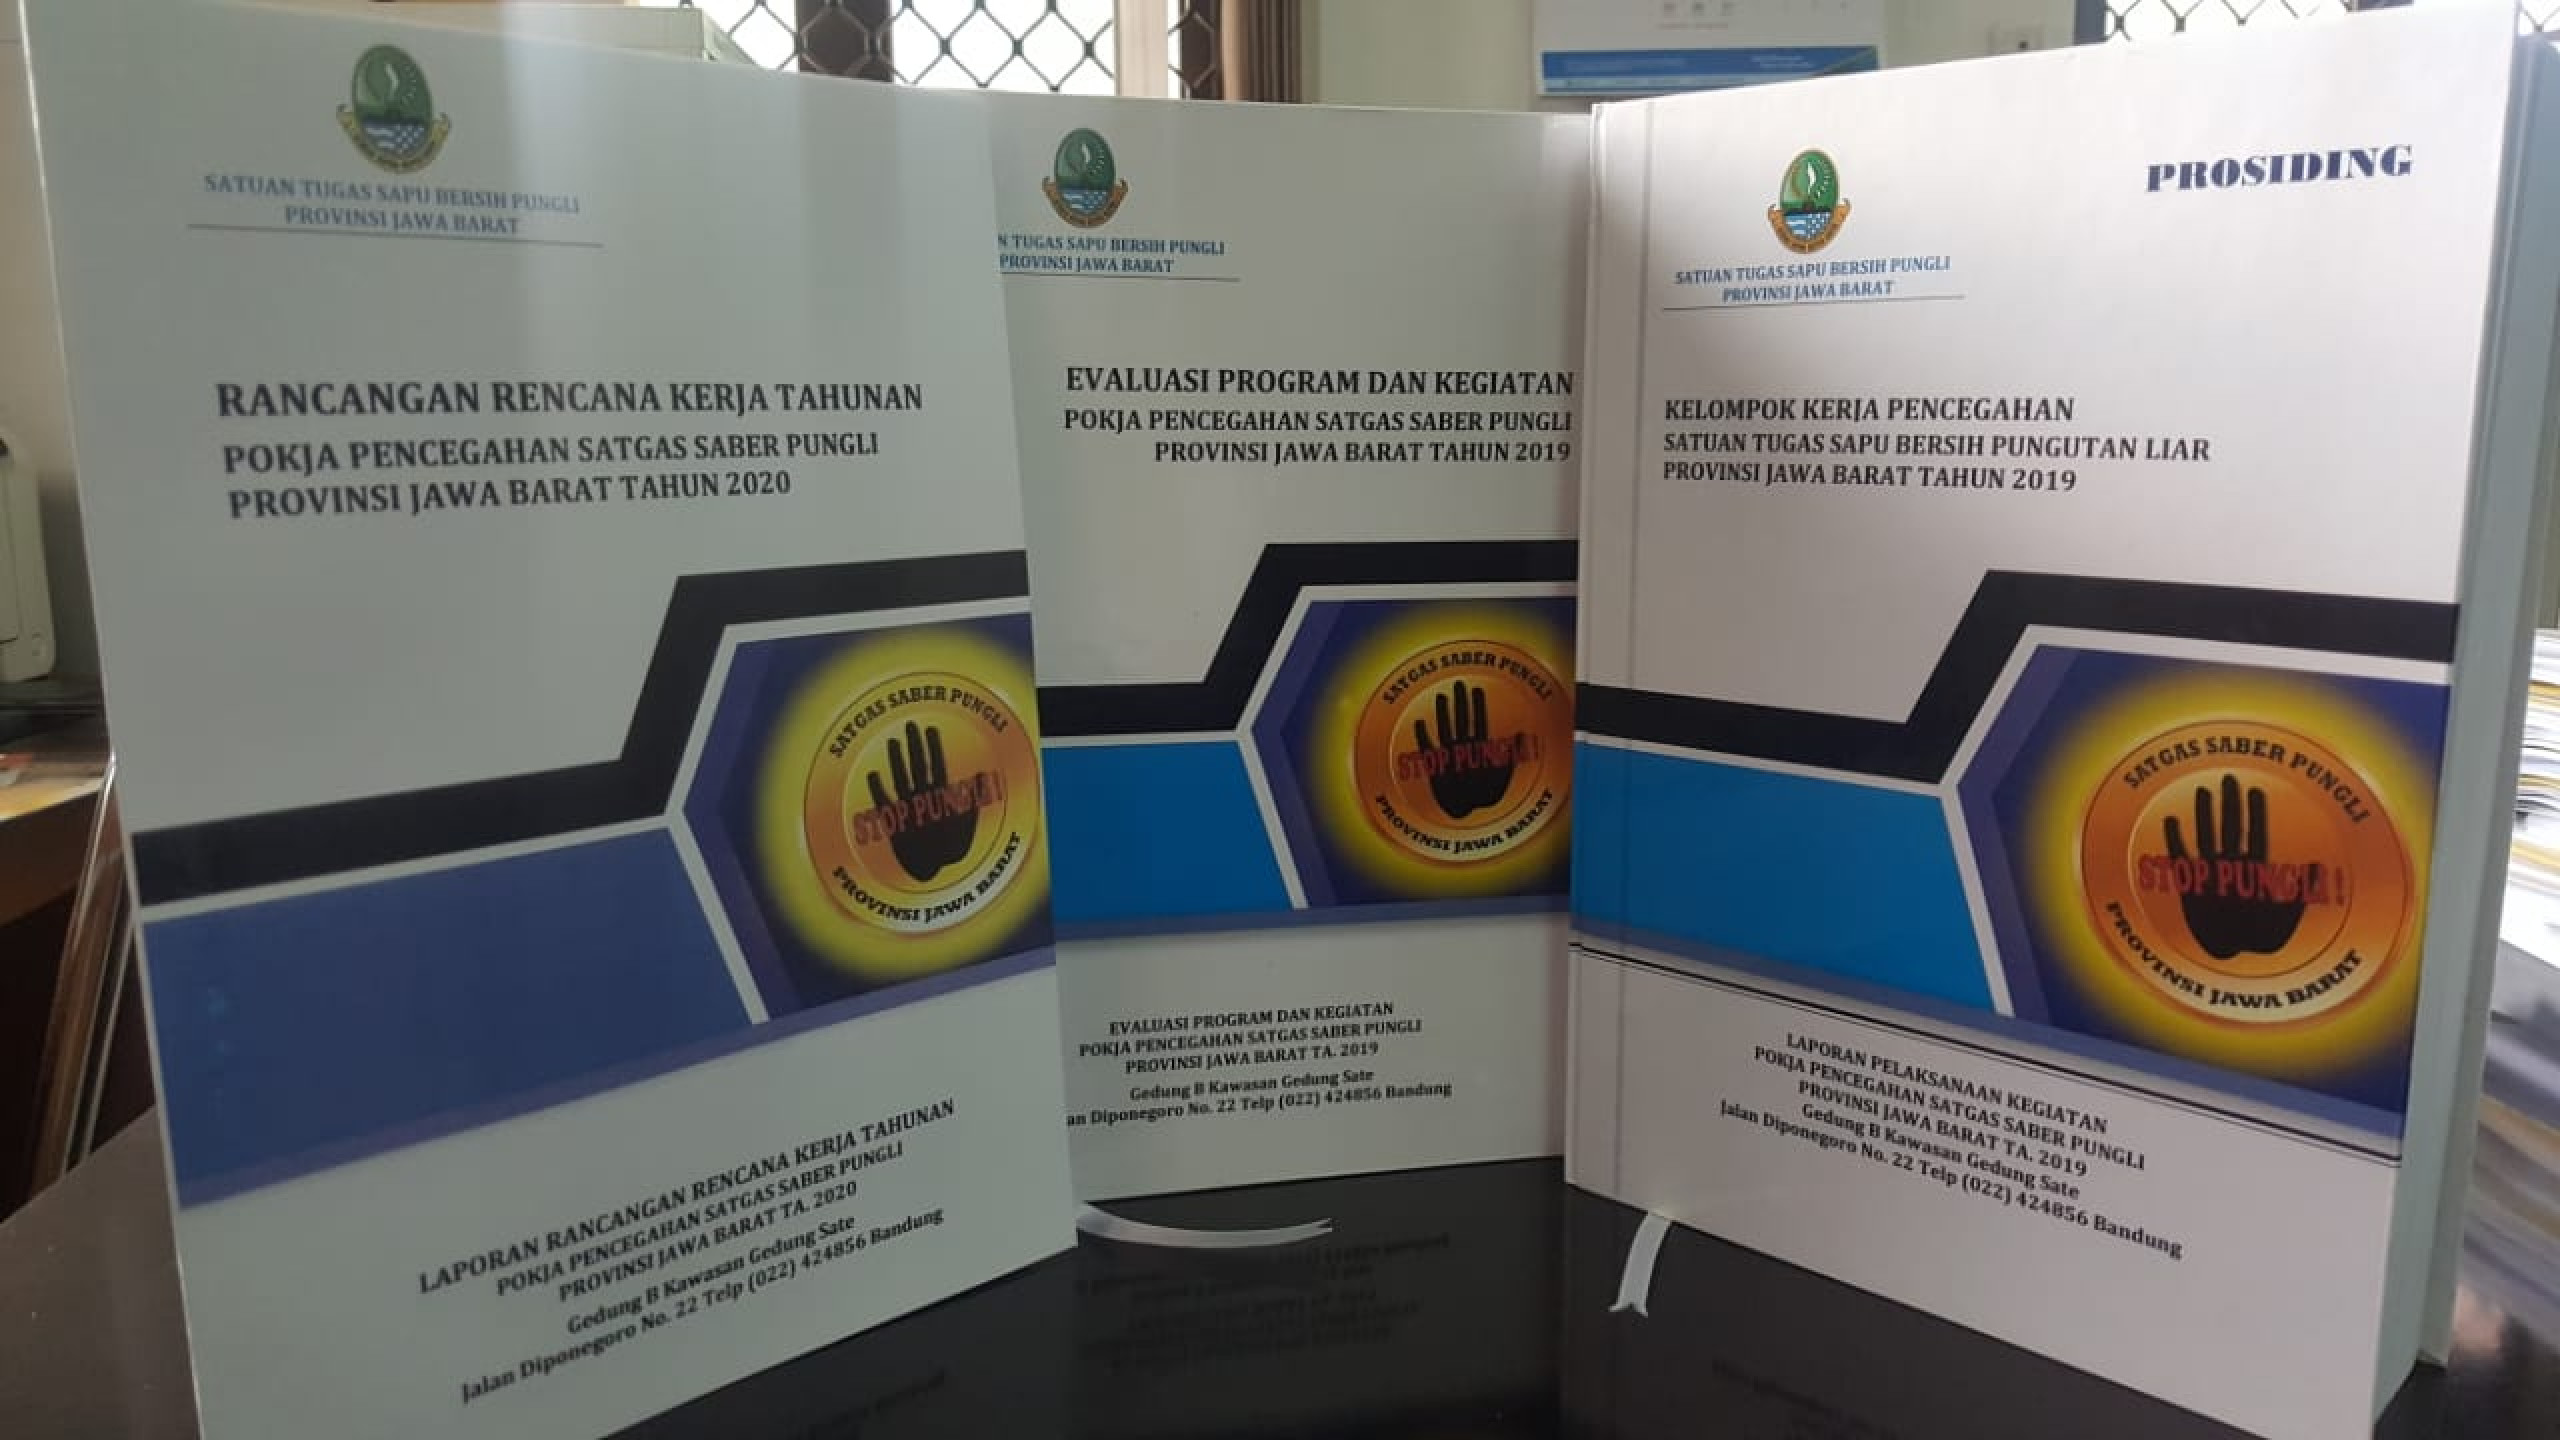 saberpungli jabar - Laporan Rancangan Rencana Kerja Tahunan Pokja Pencegahan Satgas Saber Pungli Provinsi Jawa Barat Ta. 2020